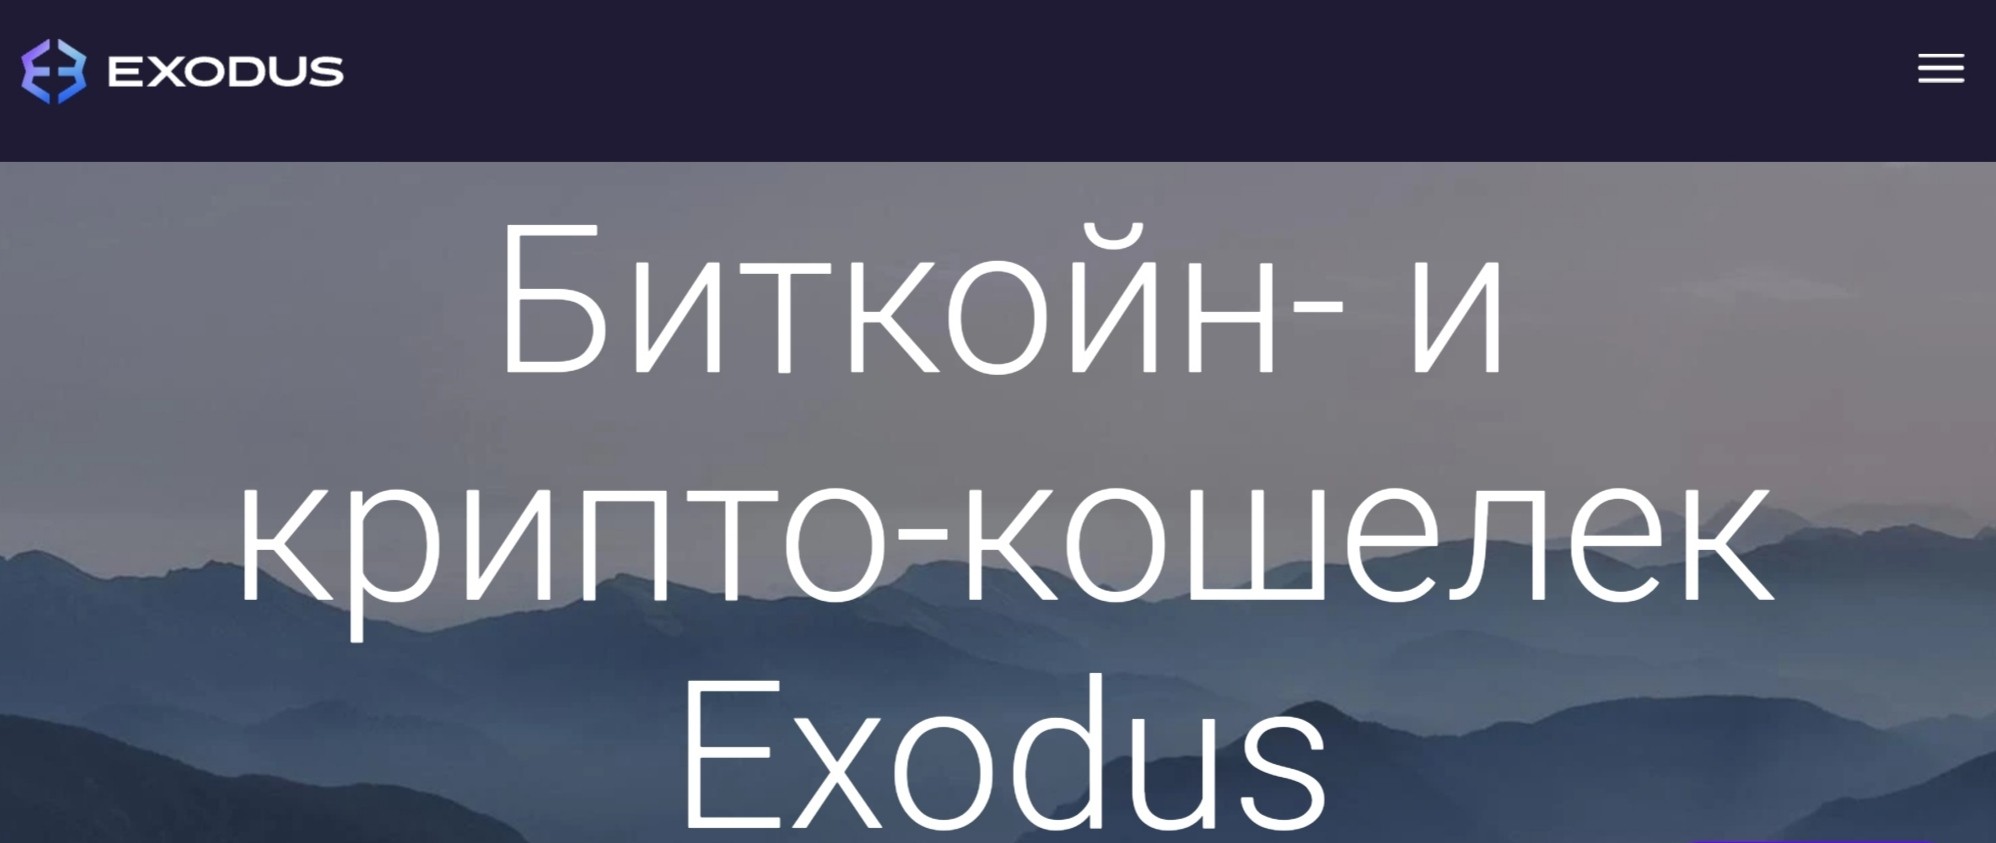 Exodus wallet обзор проекта